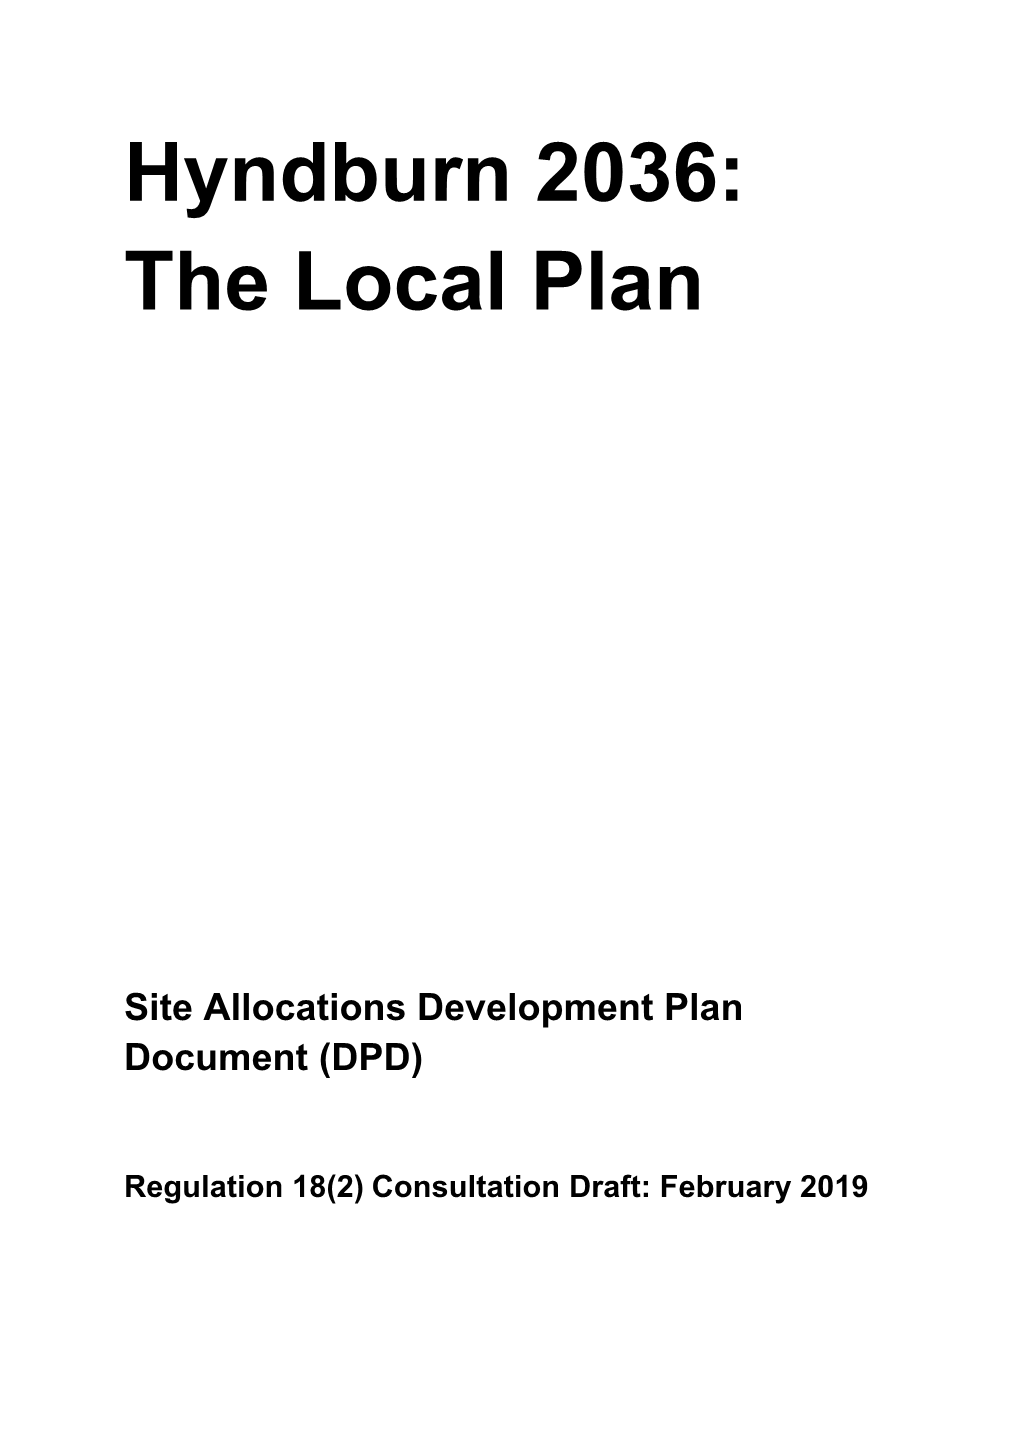 Hyndburn 2036: the Local Plan